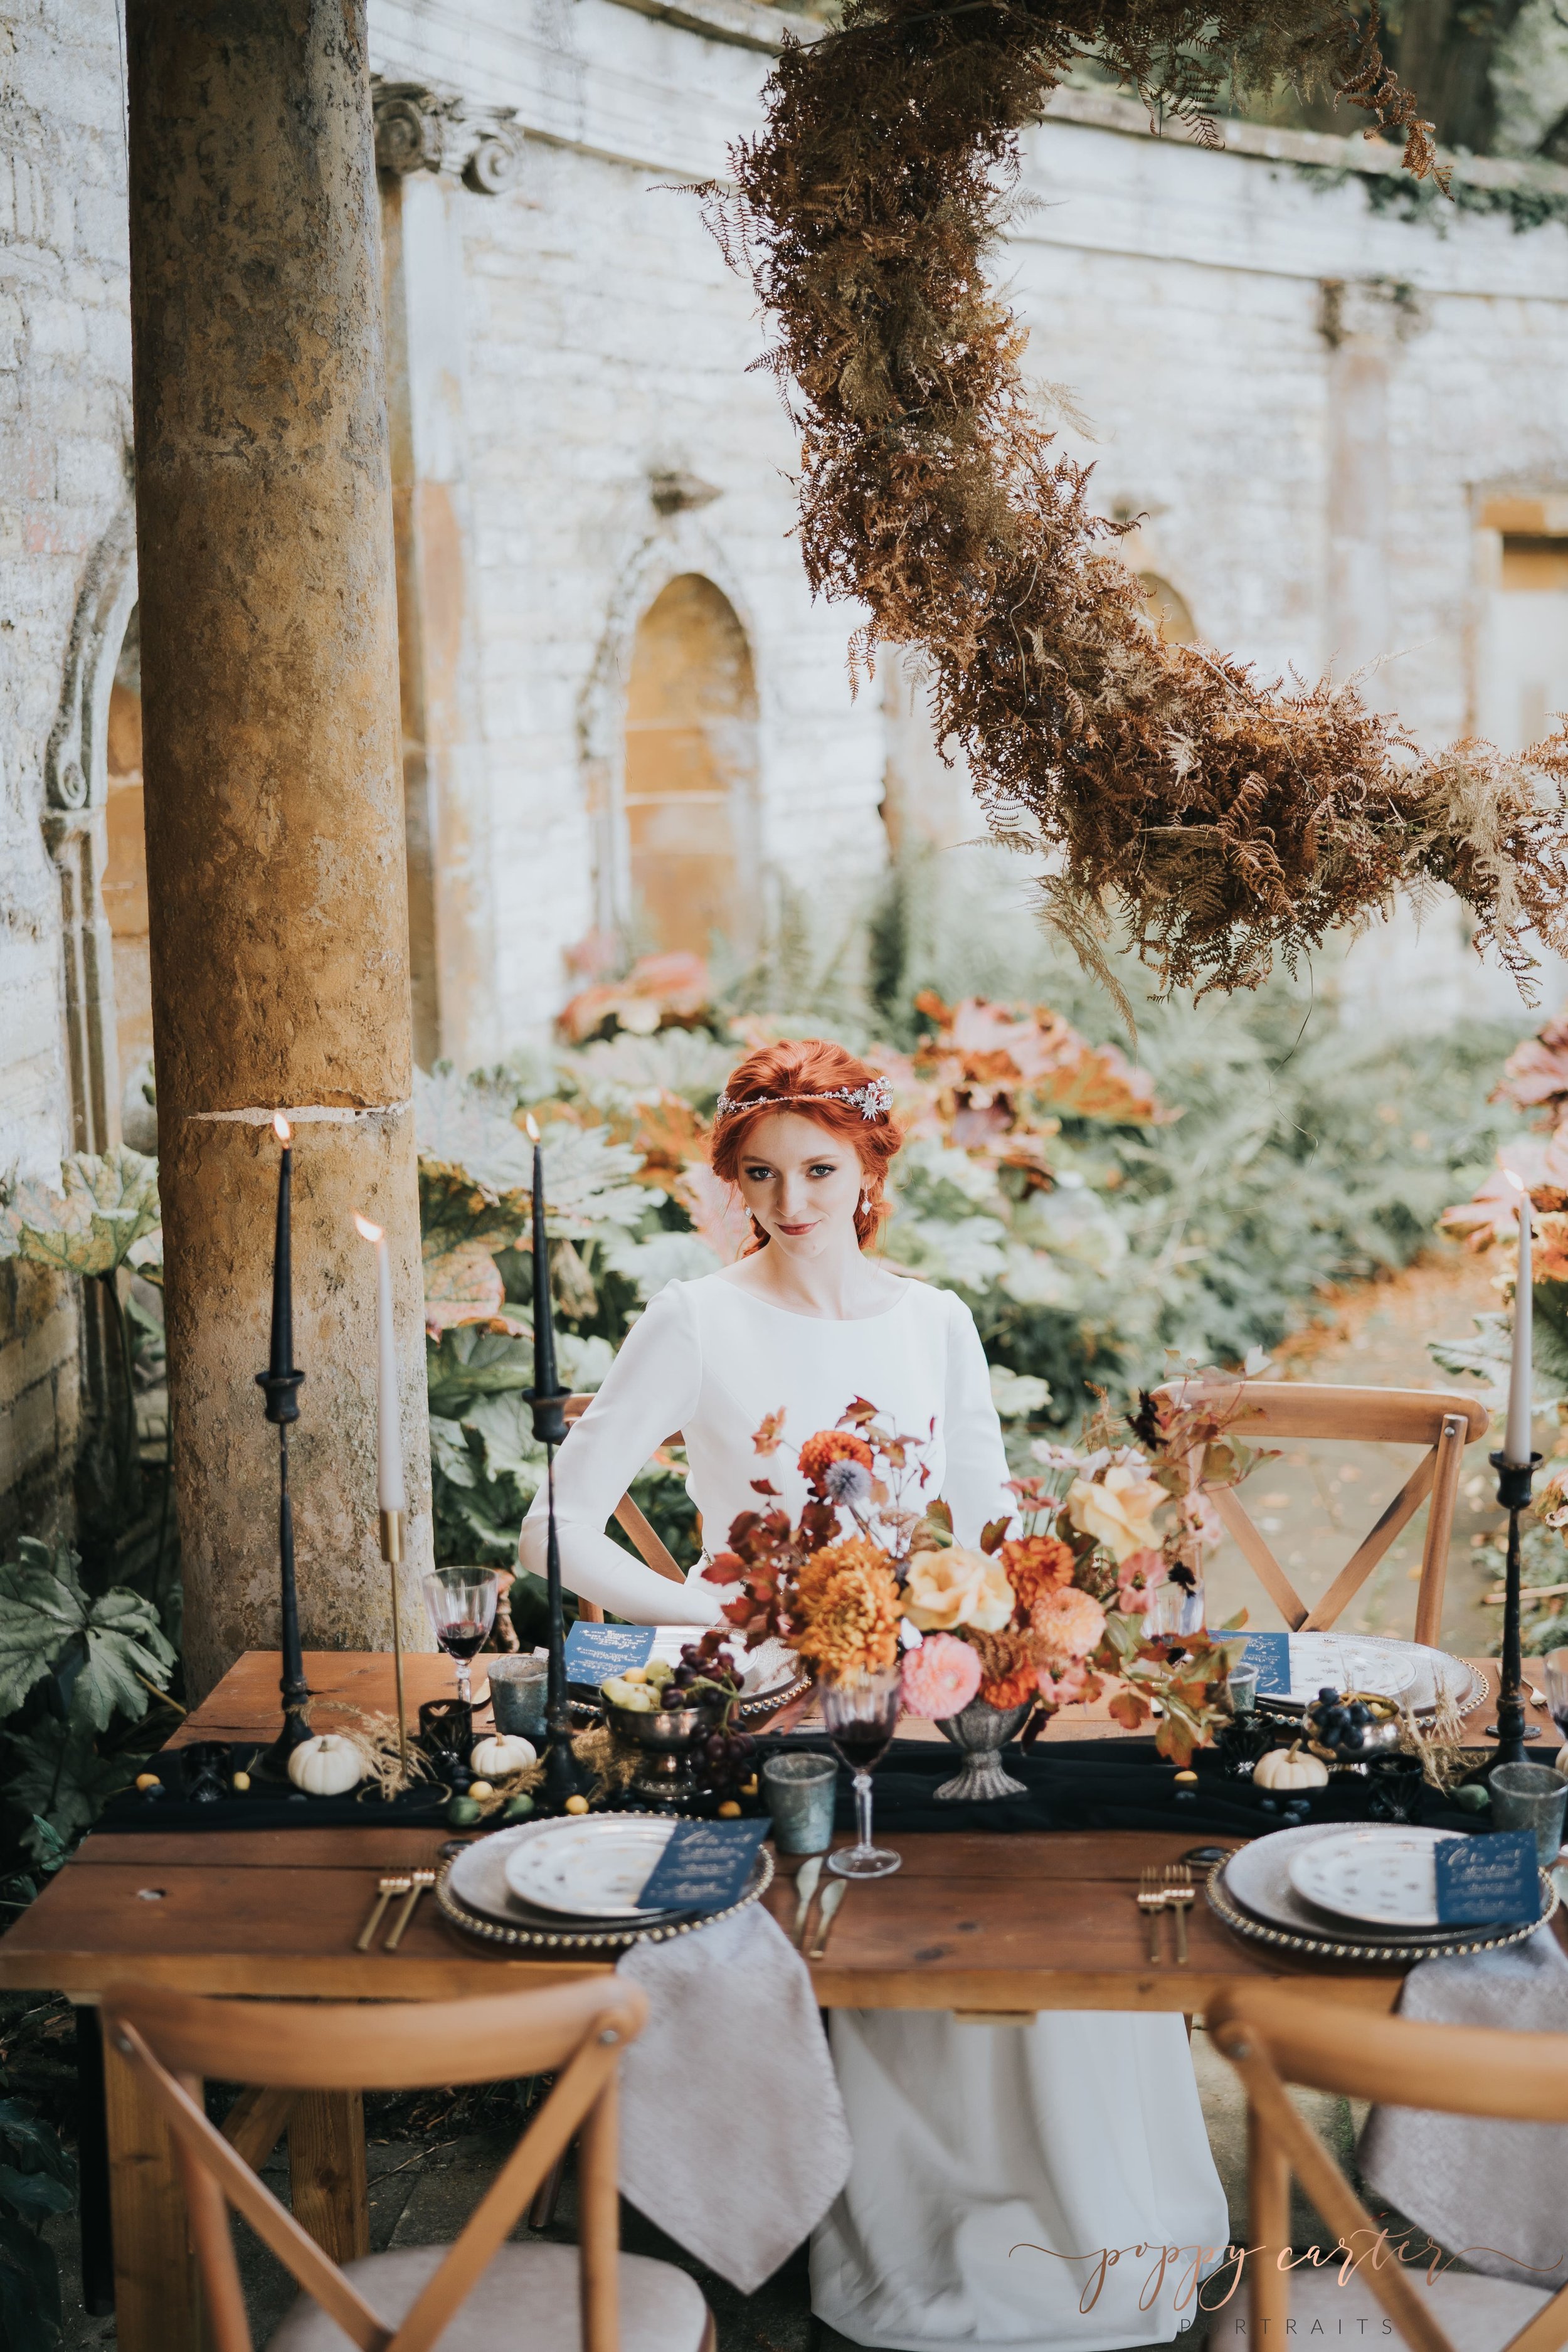 Autumn bride at wedding breakfast table